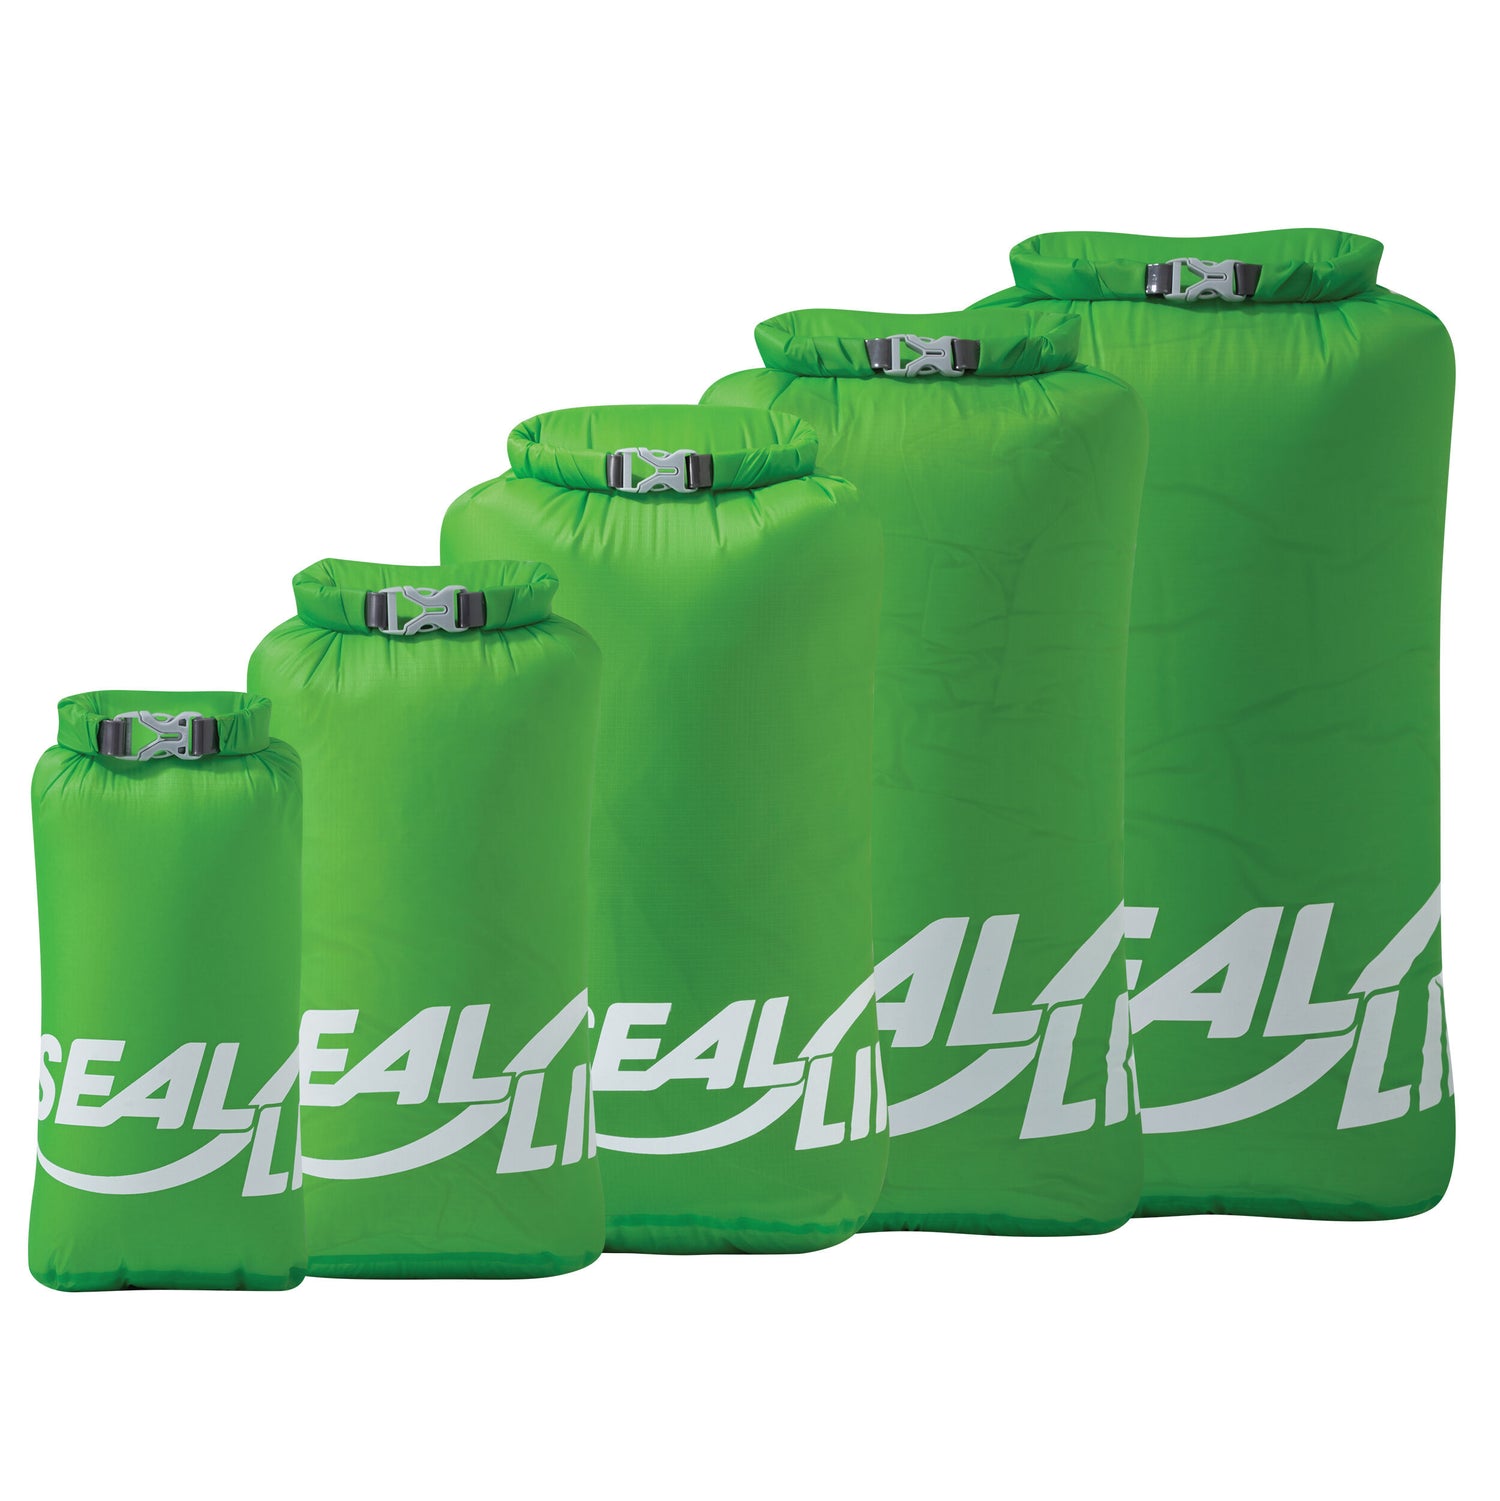 SealLine BlockerLite Dry Sack 2.5L Green